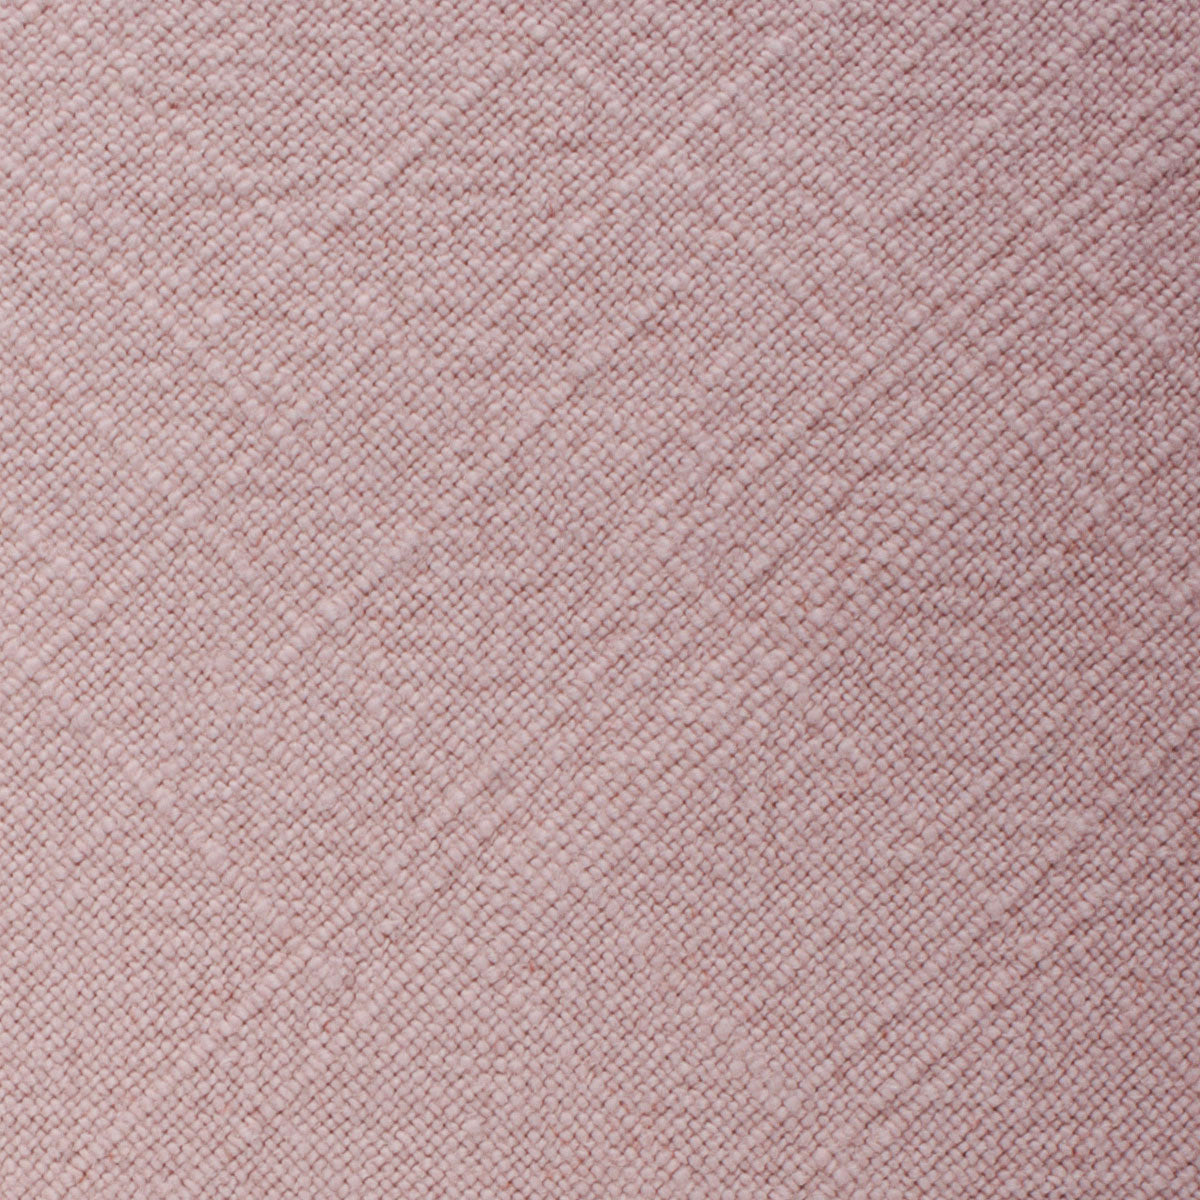 Dusty Rose Quartz Linen Pocket Square Fabric